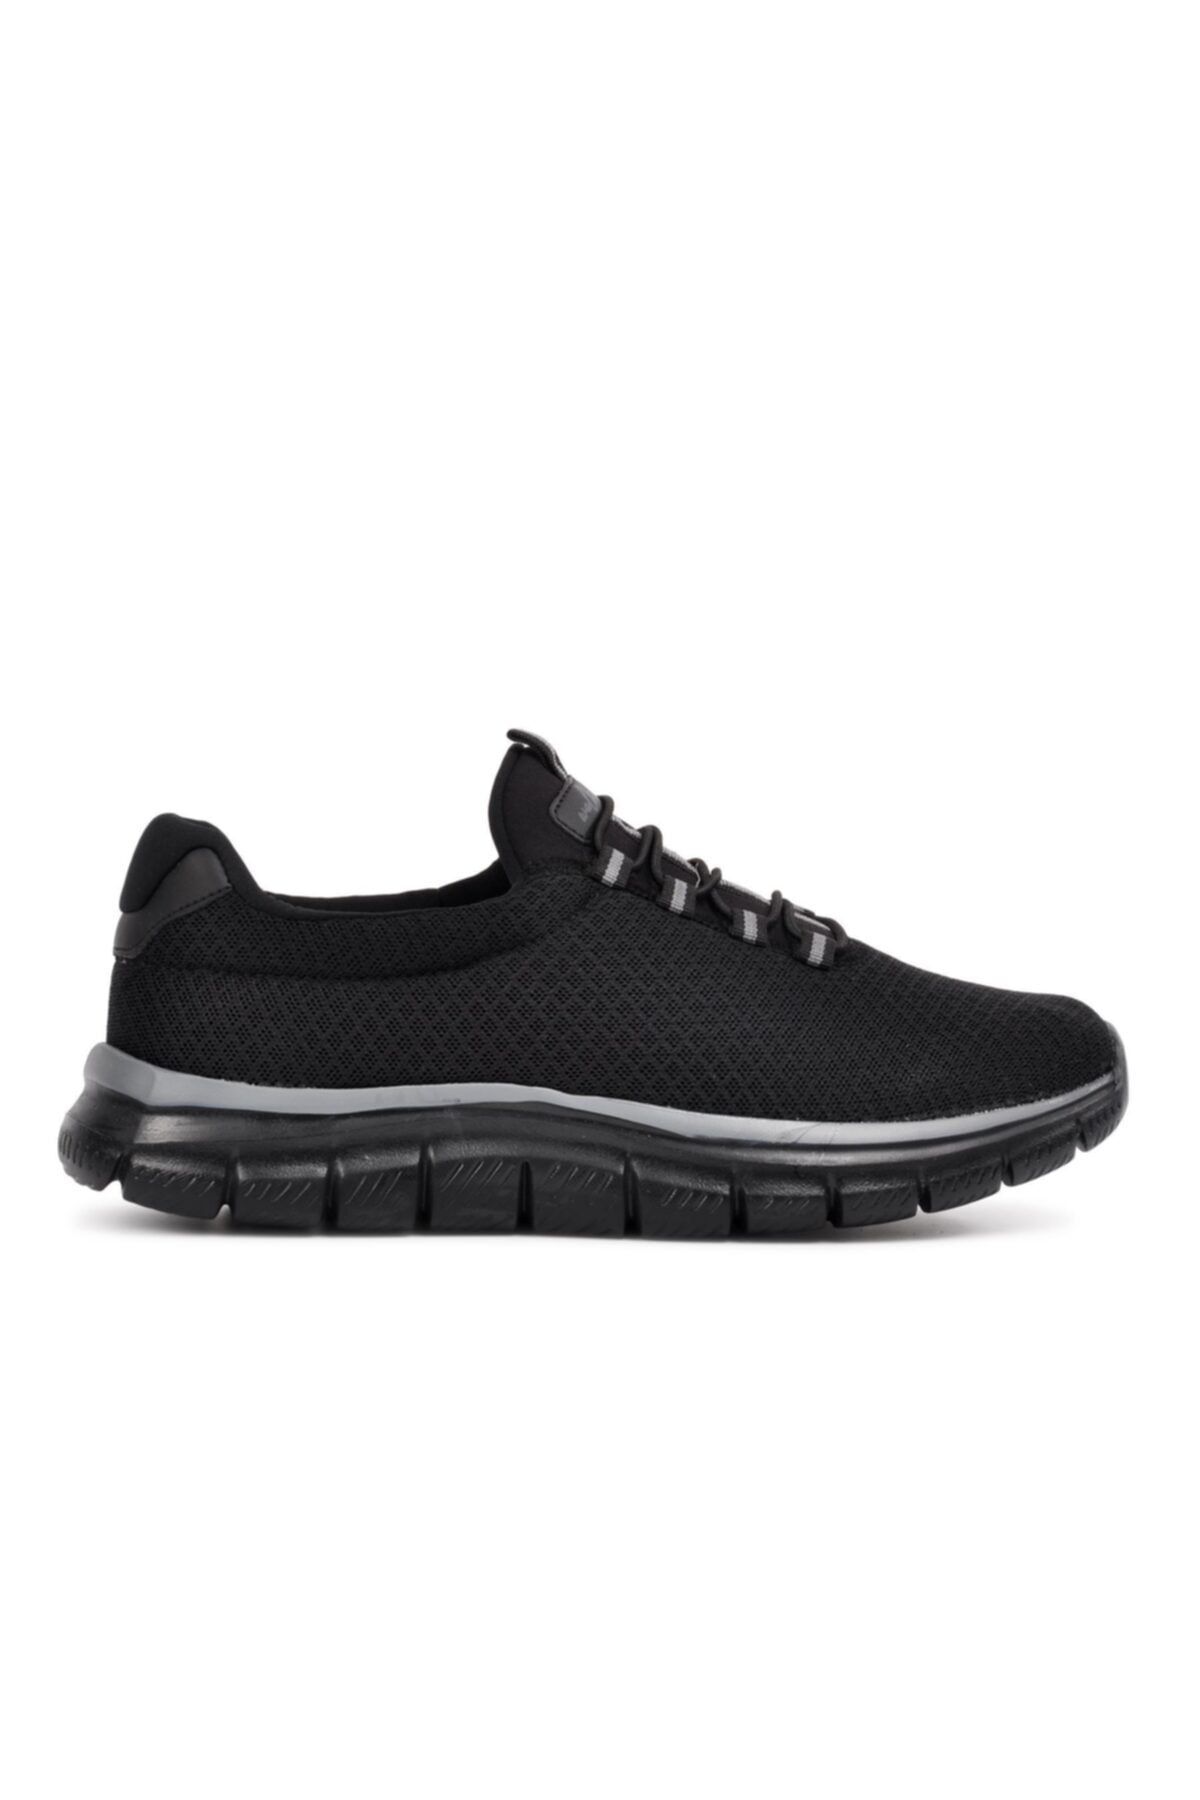 WALKWAY Flexible Siyah-siyah Comfort Spor Ayakkabı